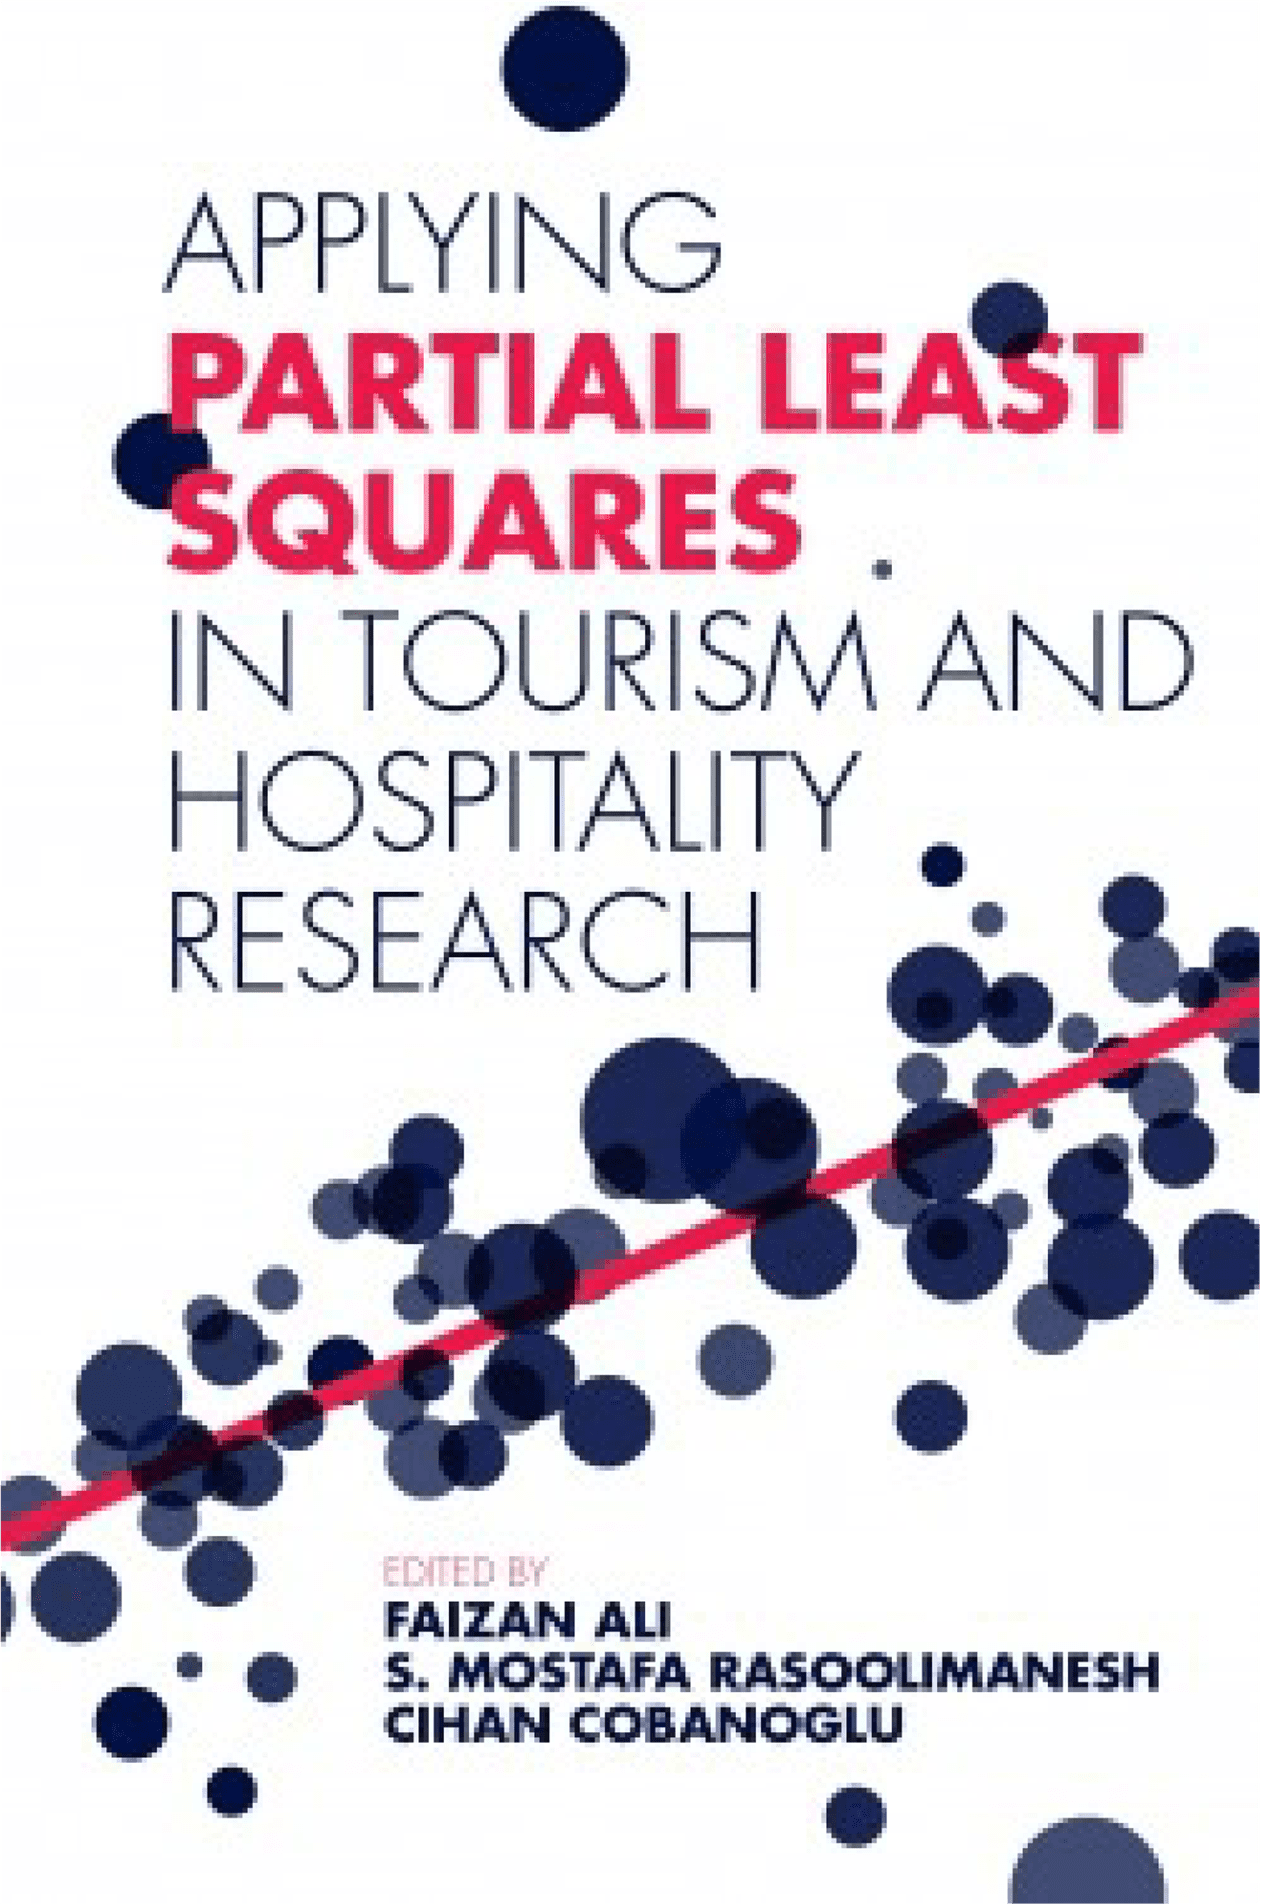 Applying Partial Least Squares in Tourism and Hospitality Research by Faizan Ali, S. Mostafa Rasoolimanesh, and Cihan Cobanoglu